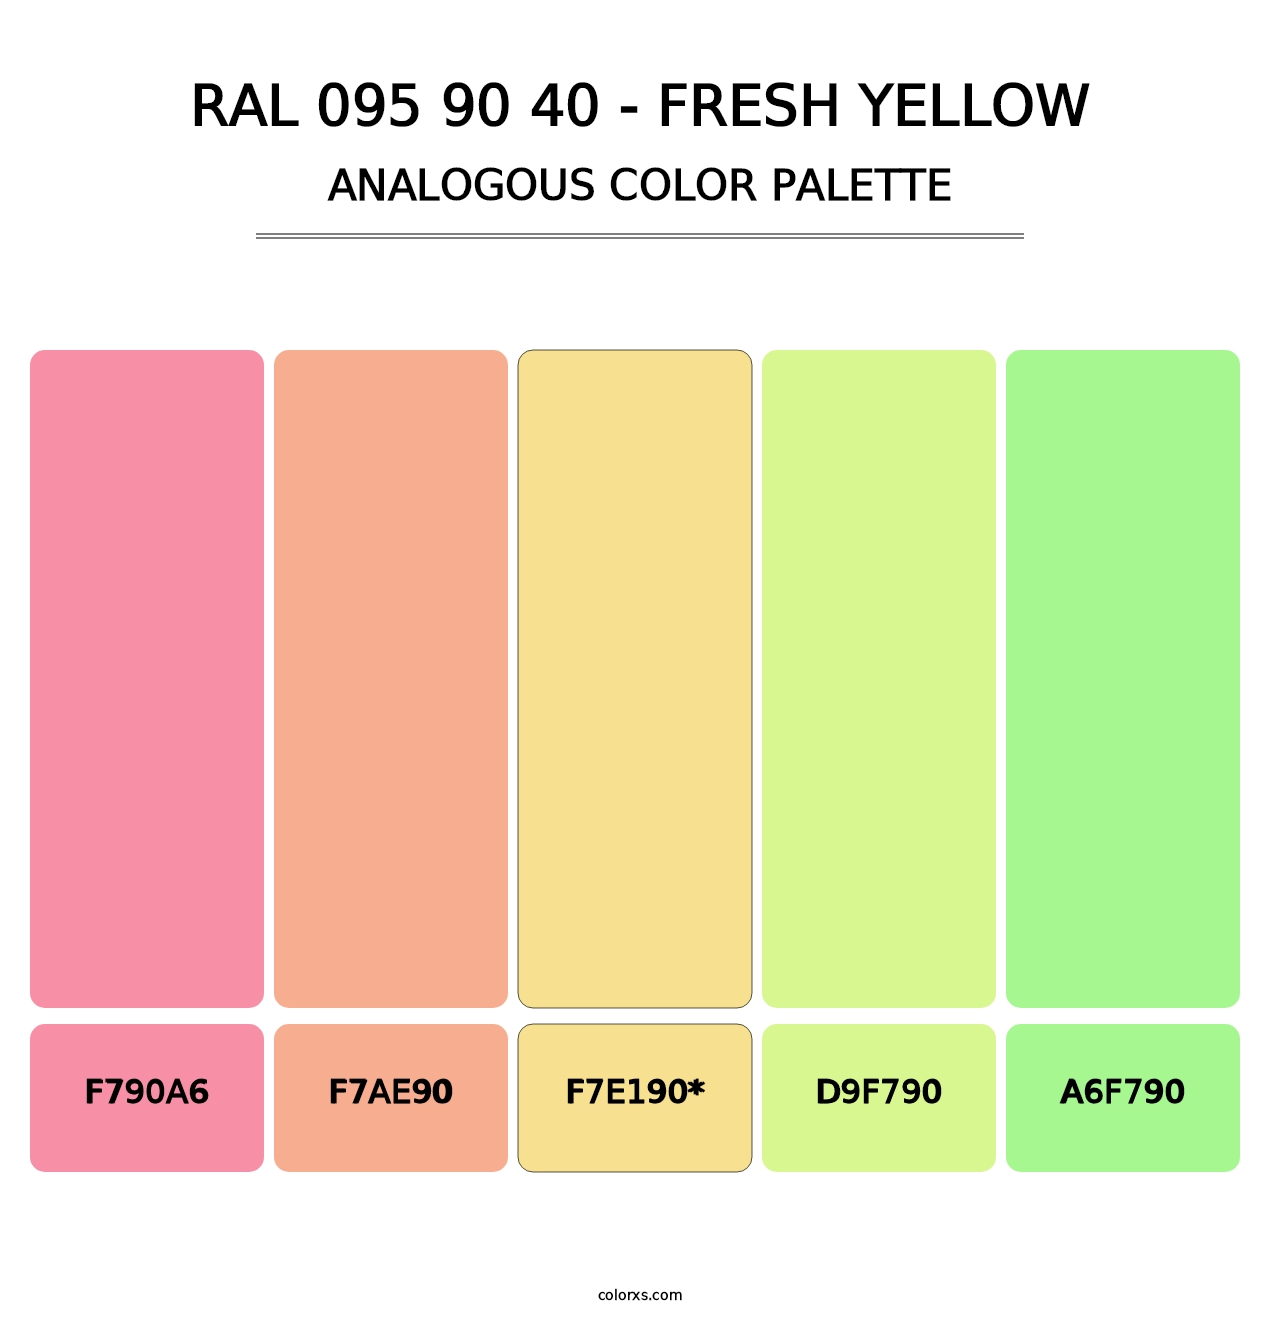 RAL 095 90 40 - Fresh Yellow - Analogous Color Palette